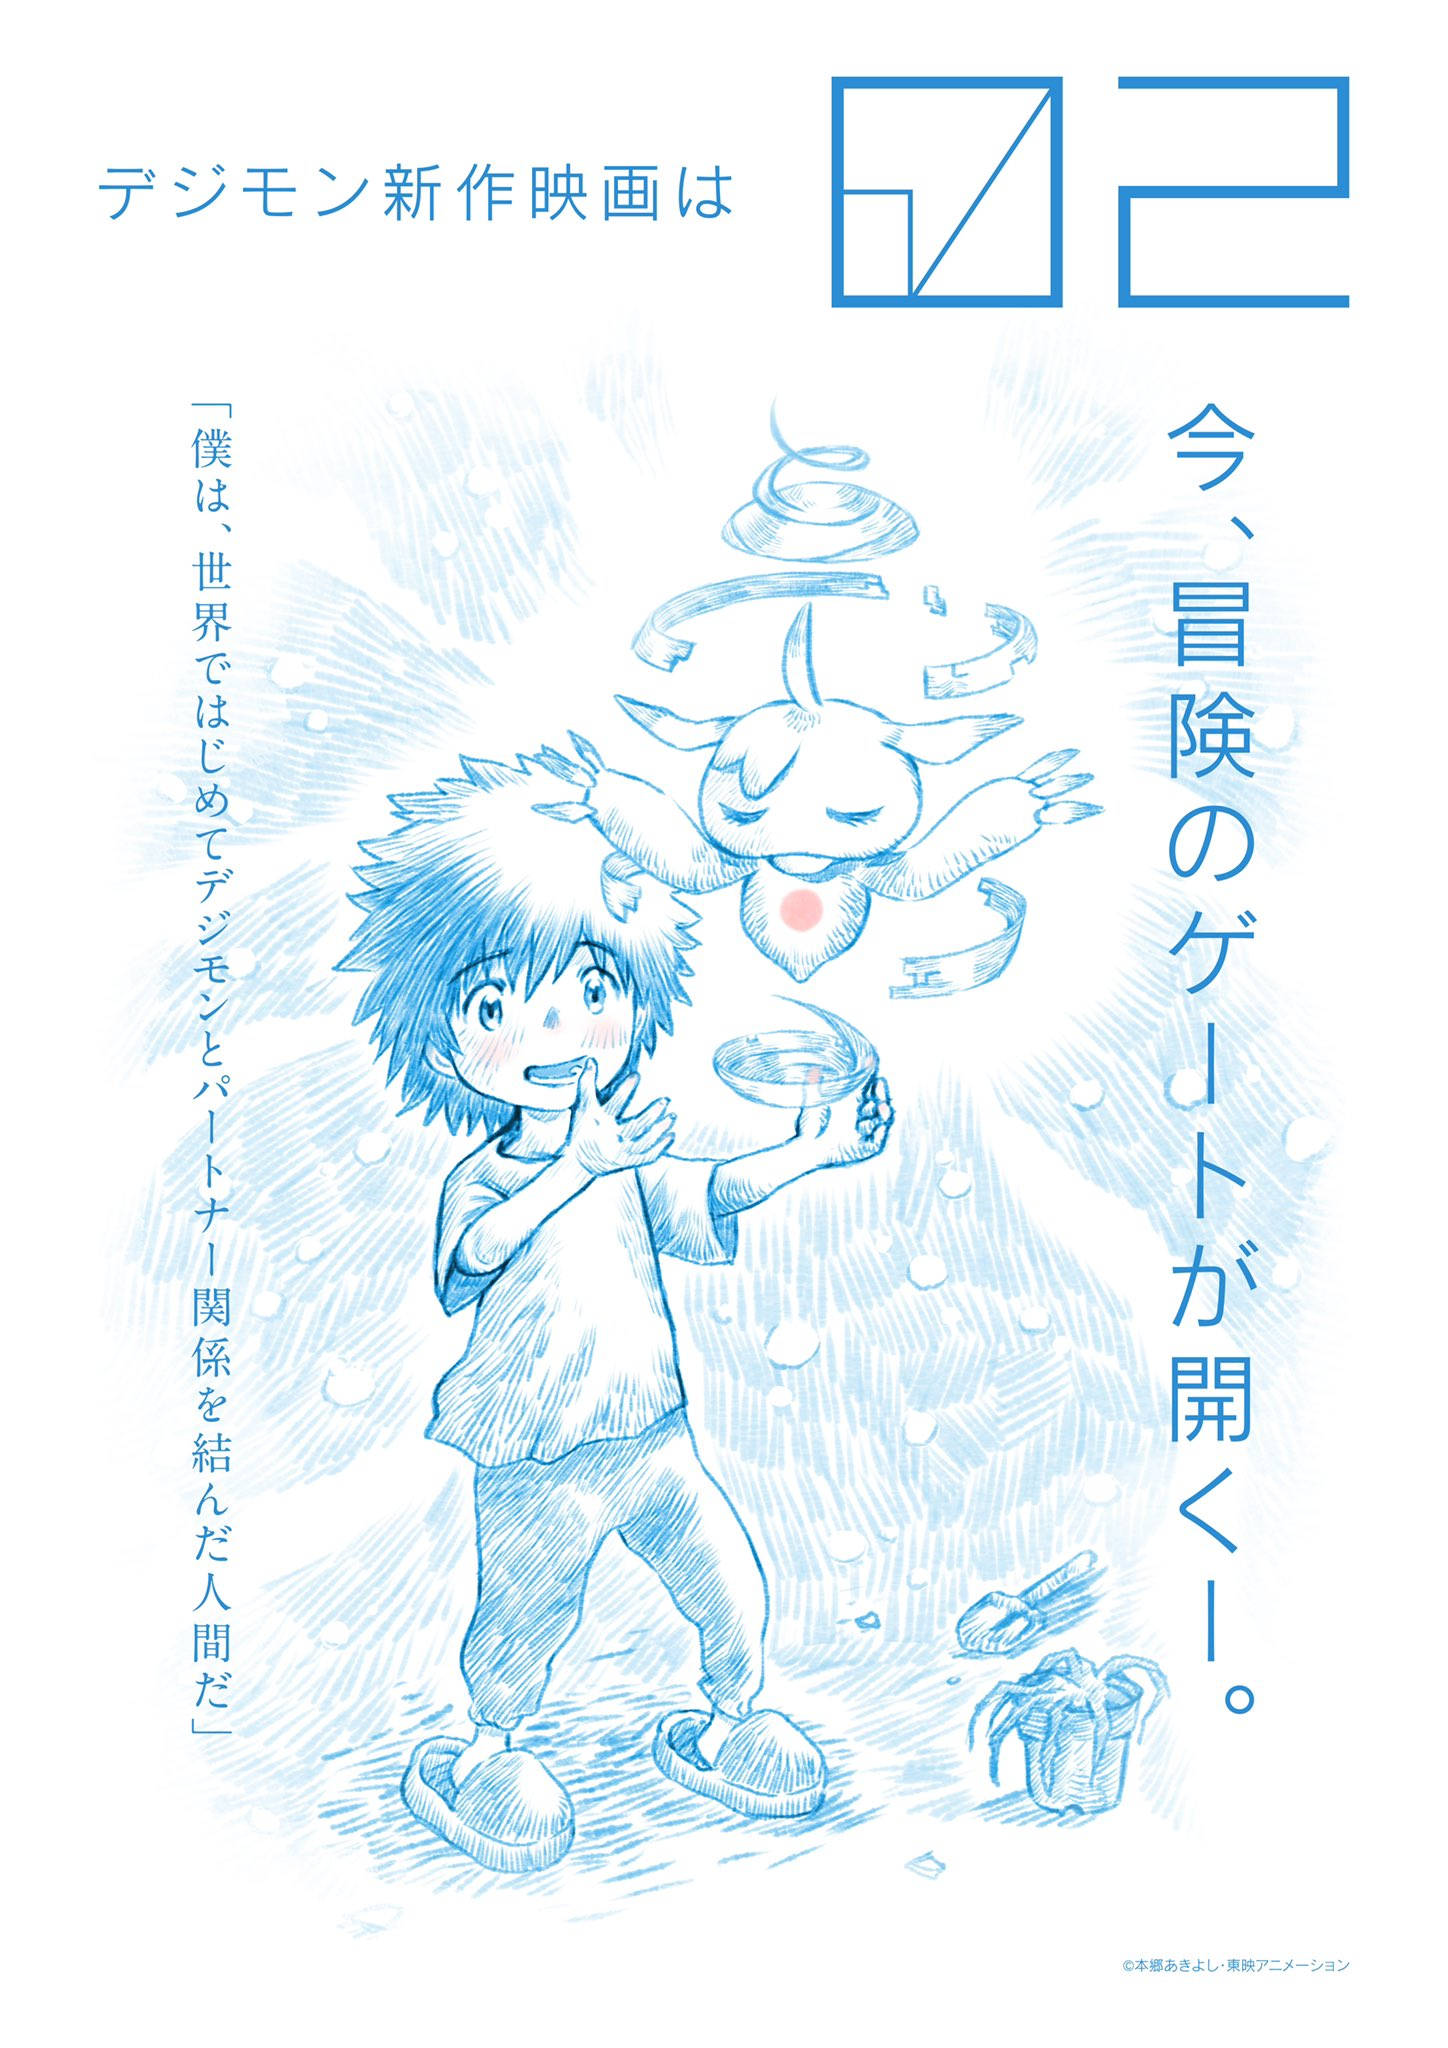 Digimon Adventure 02 (Film) (Poster).png